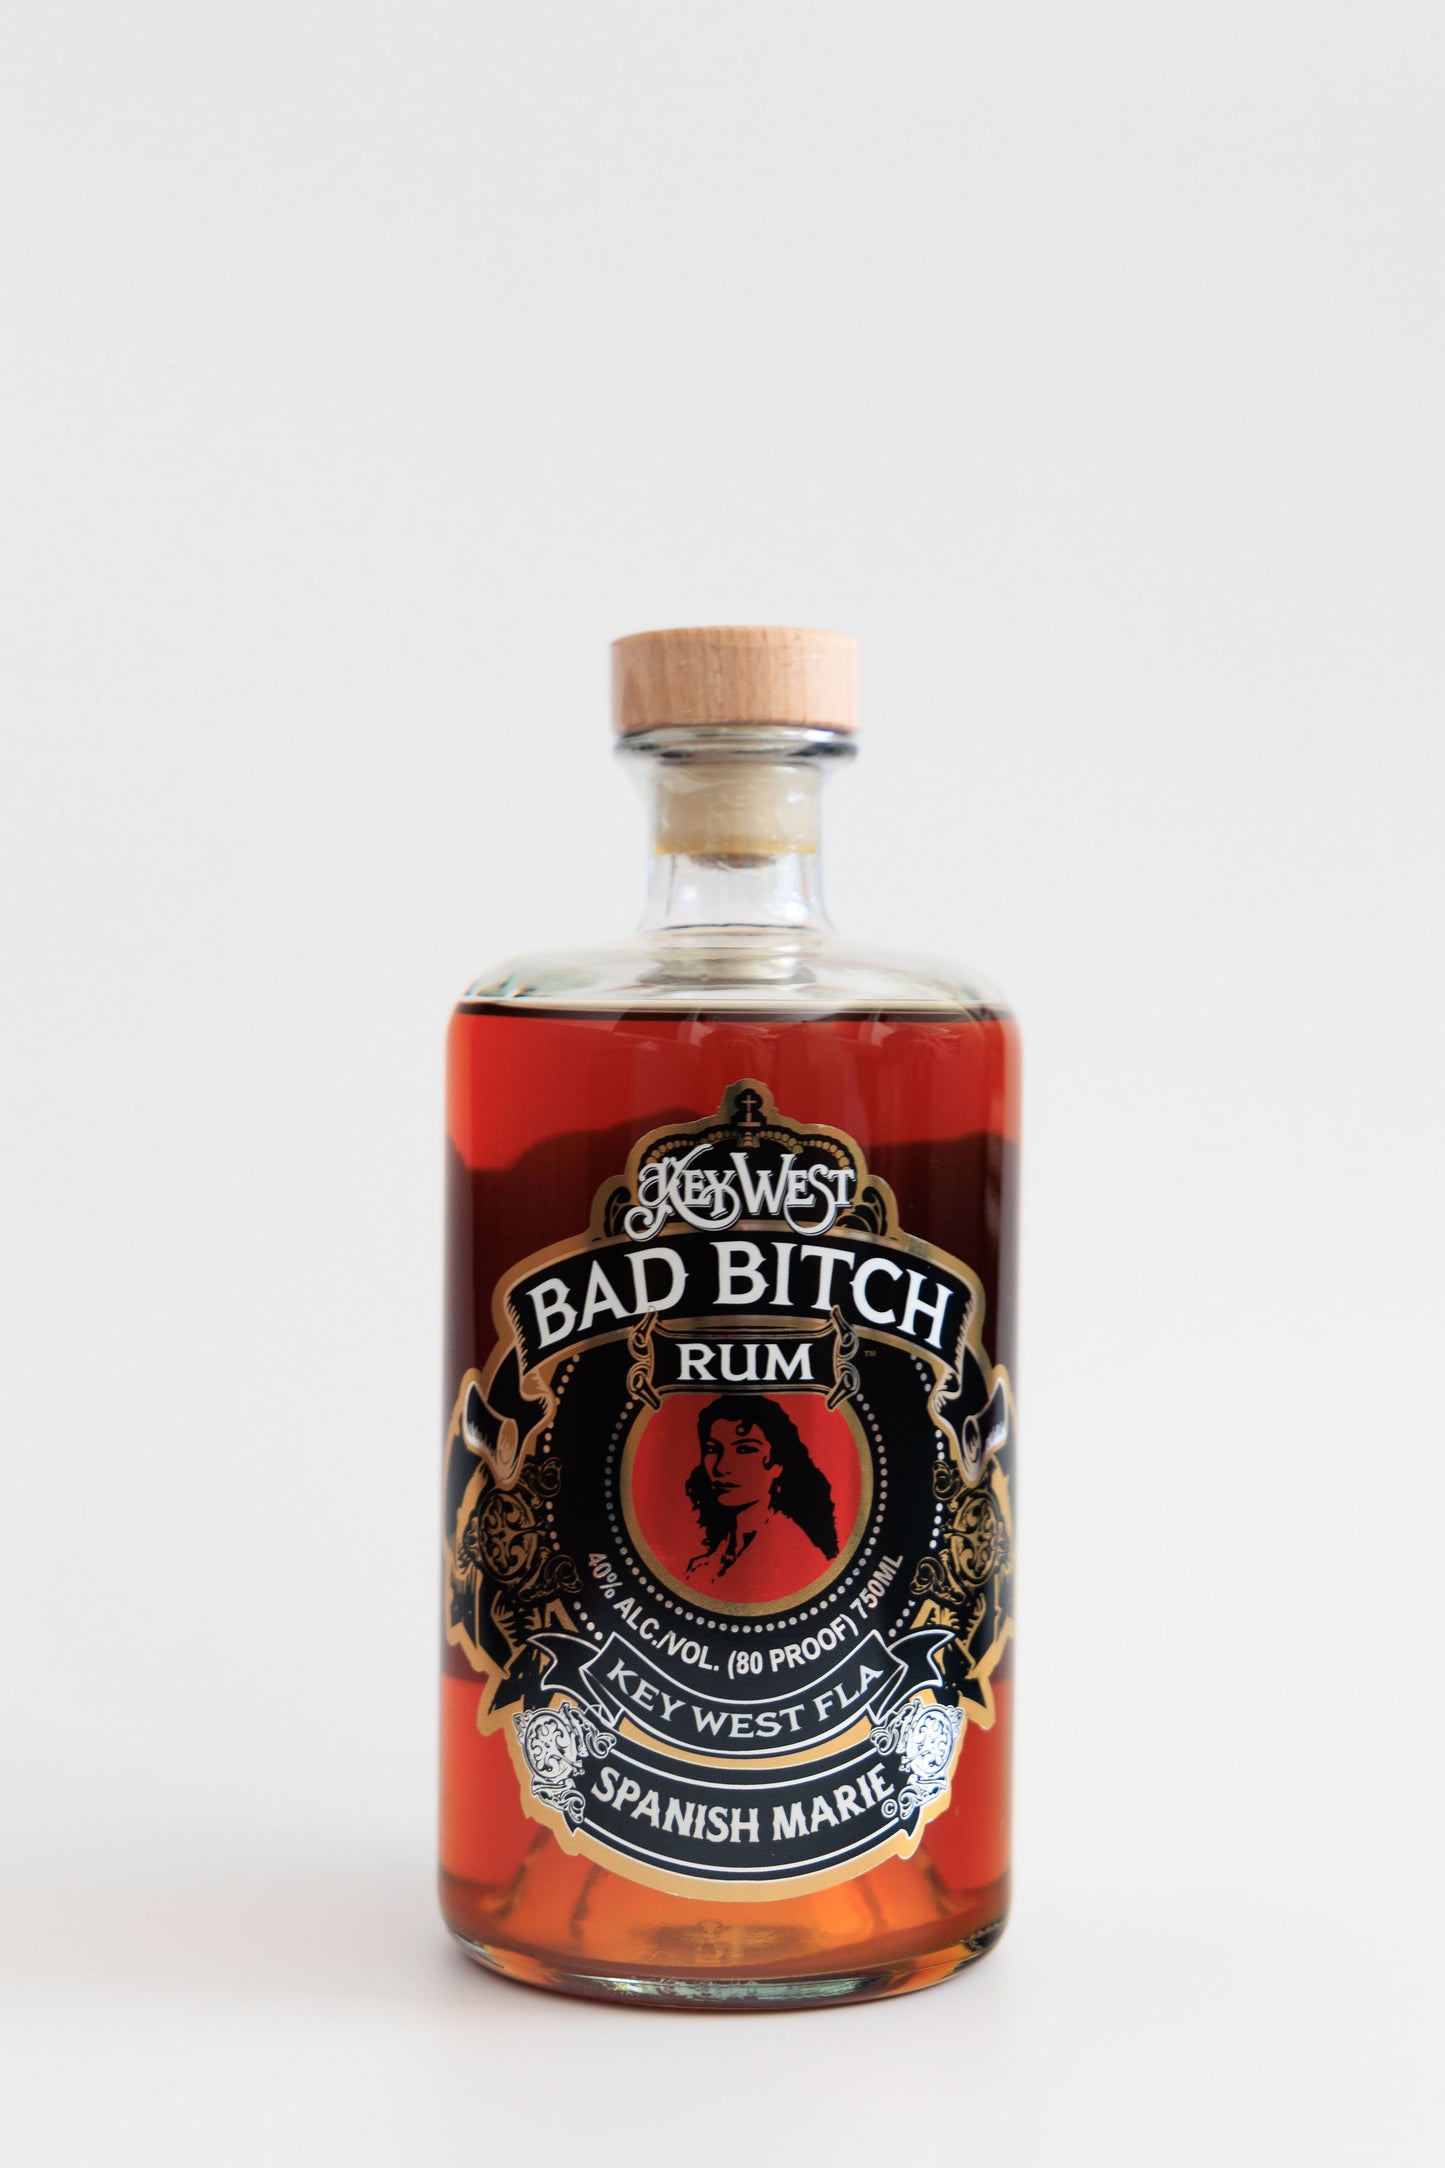 Key West Bad Bitch Rum Spanish Marie- Award Winning